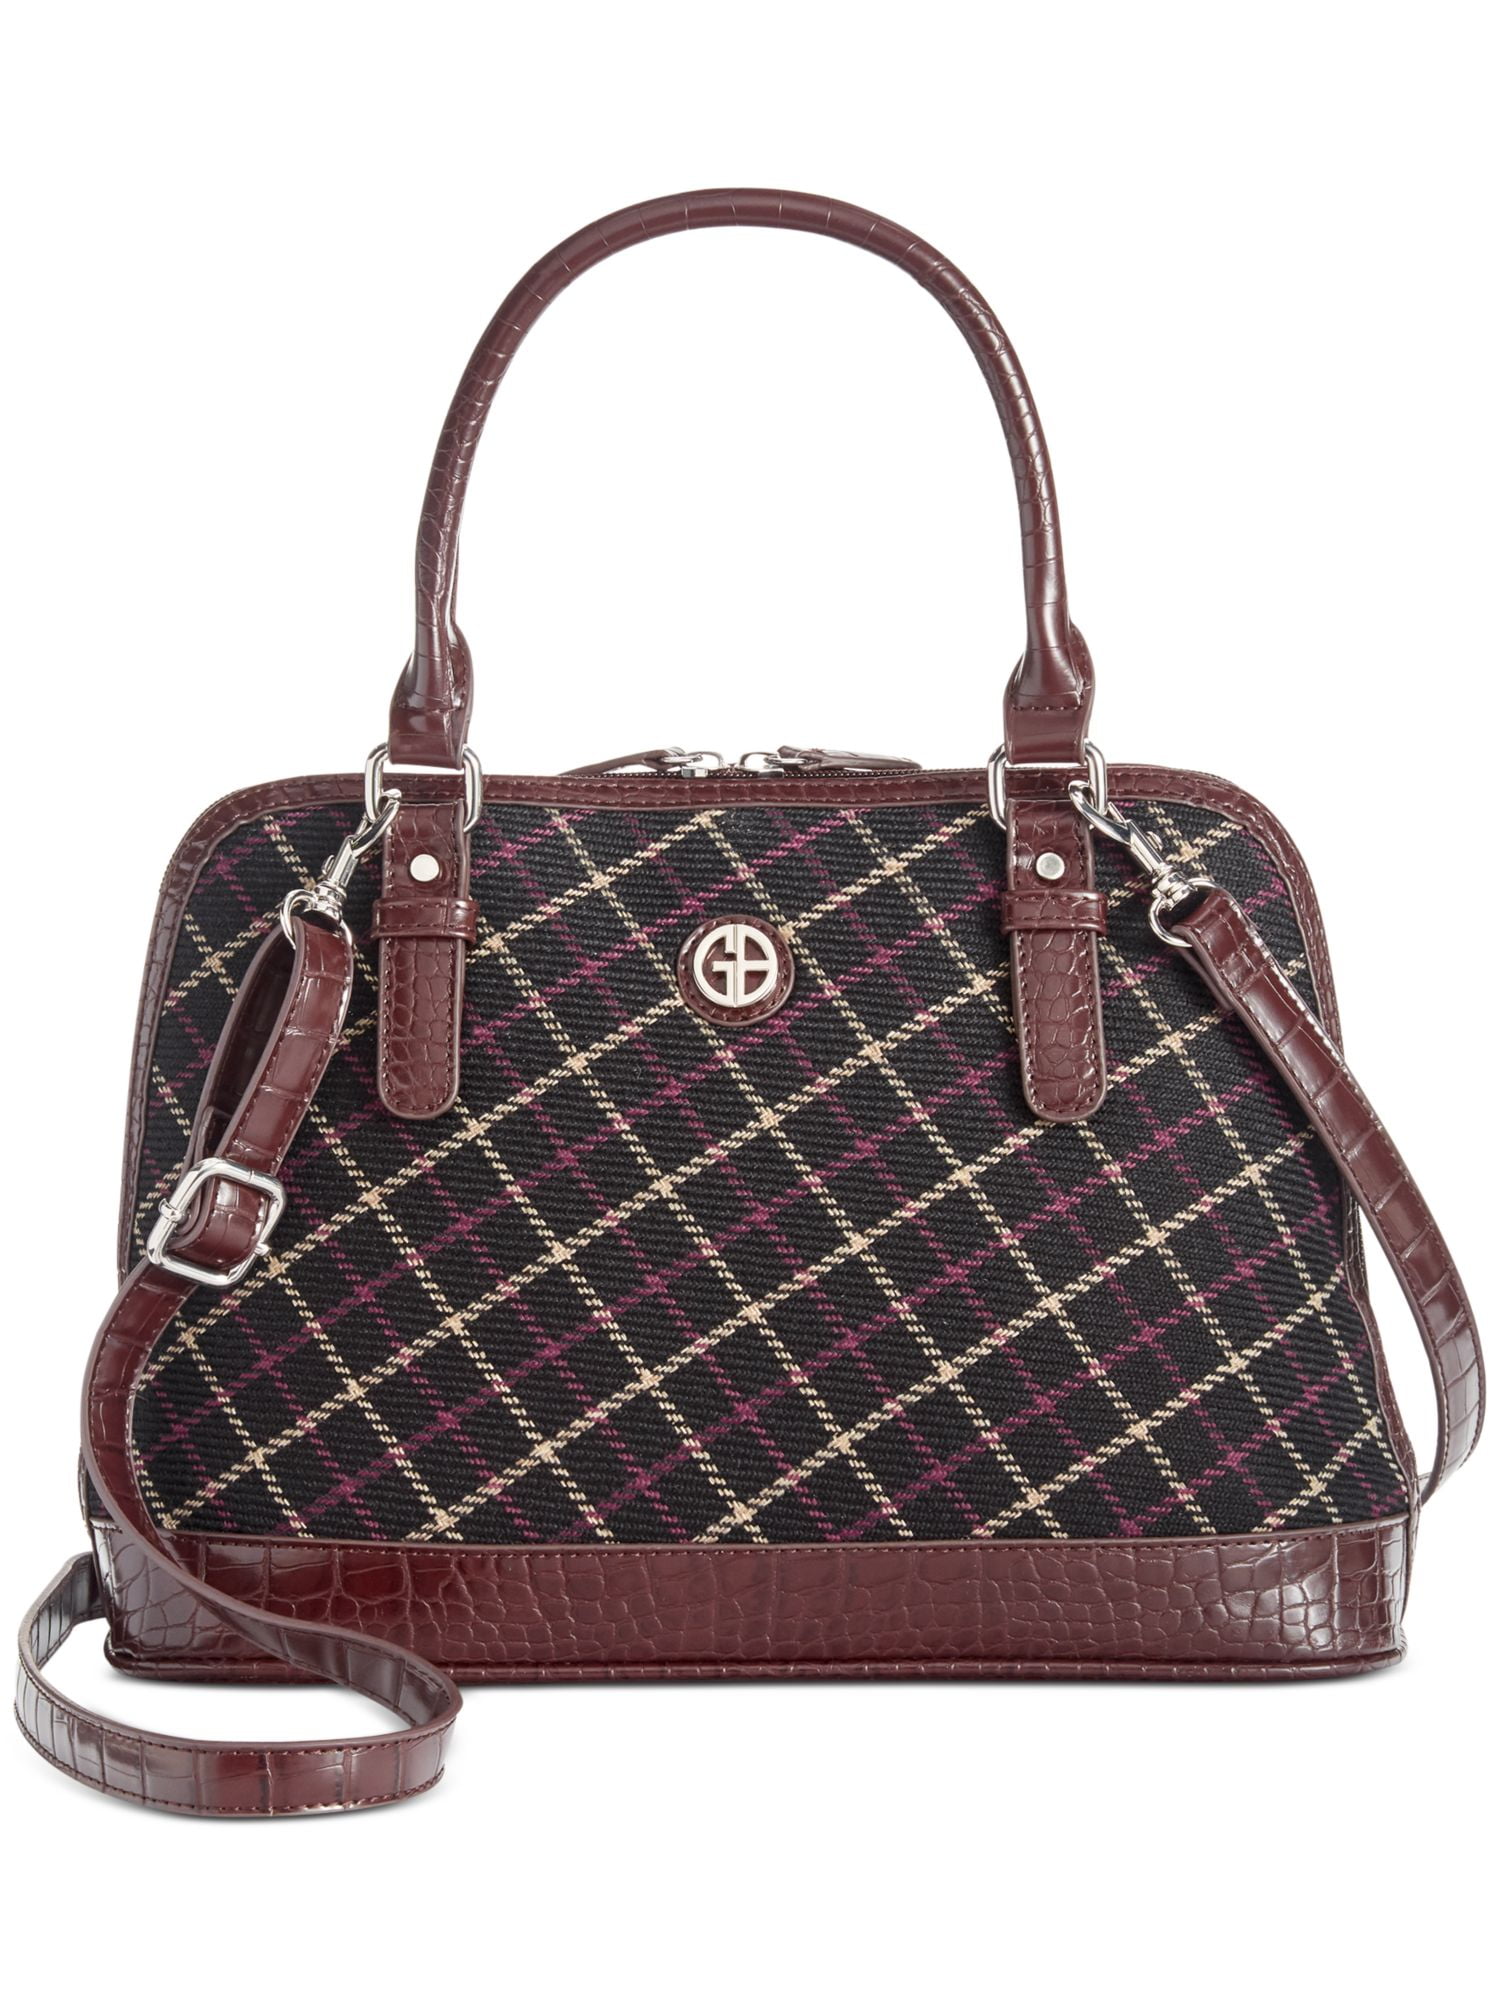 AUTHENTIC GIANI BERNINI BAG Luxury Bags  Wallets on Carousell